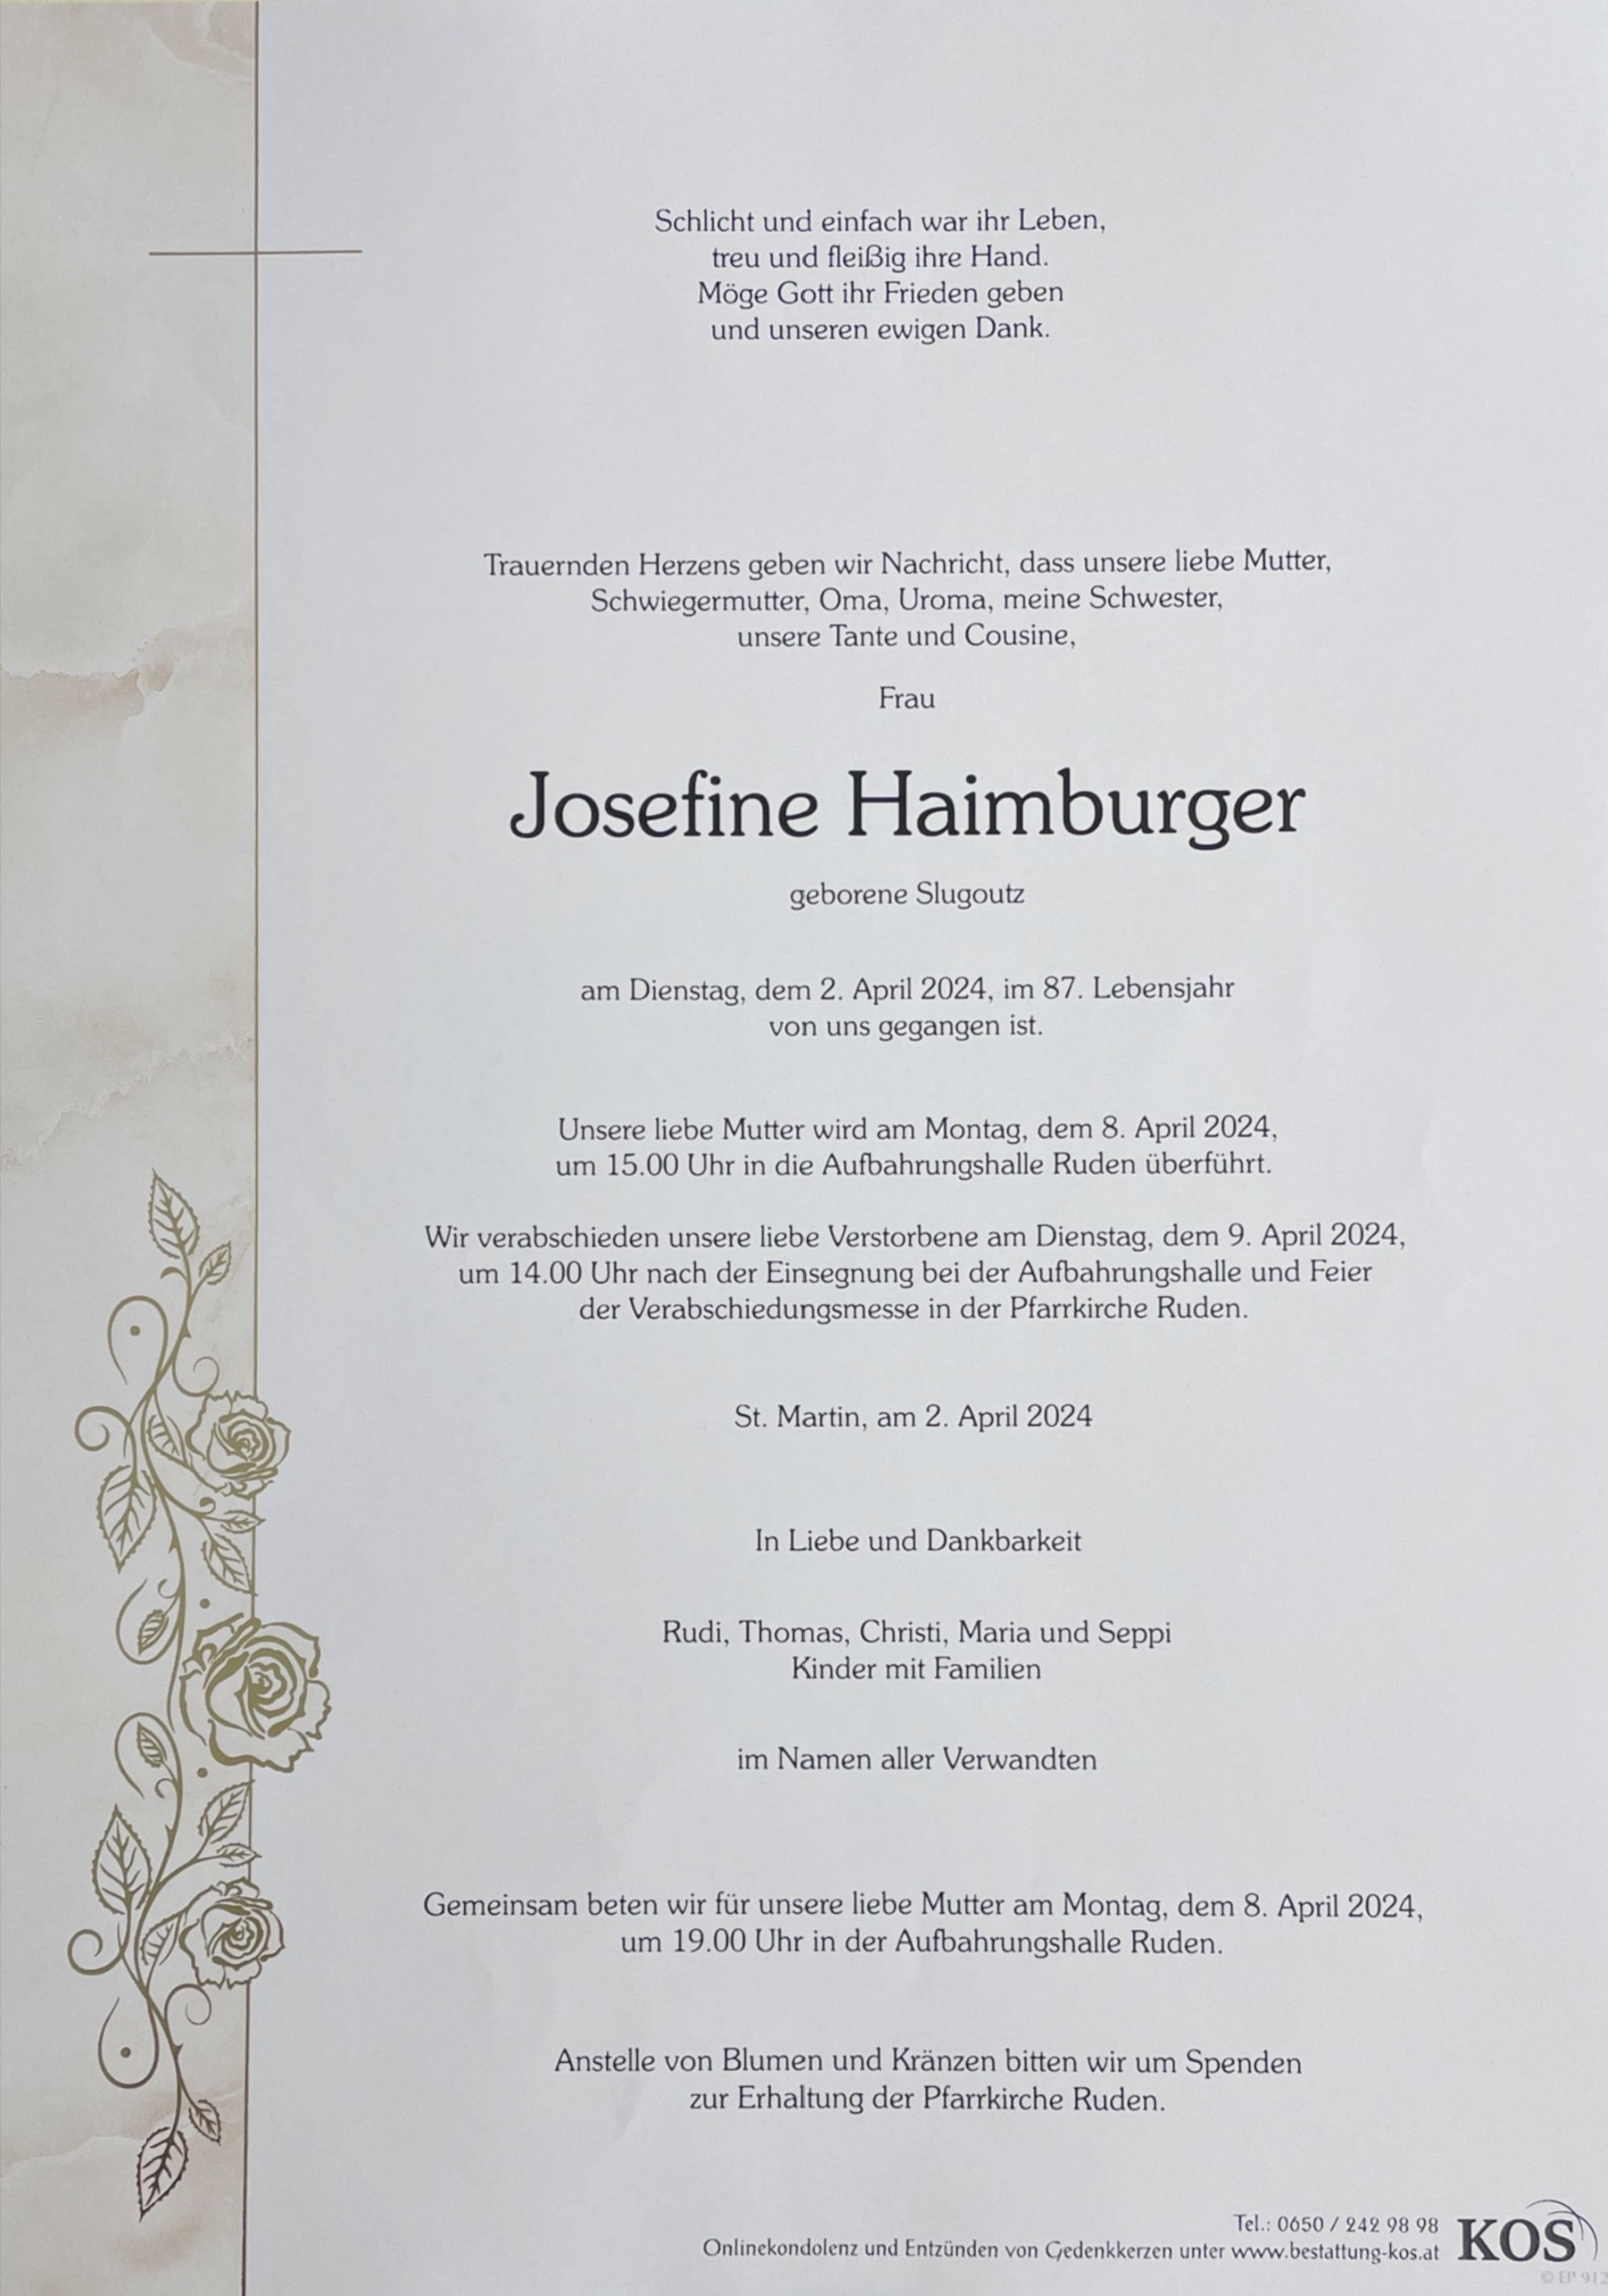 Josefine Haimburger